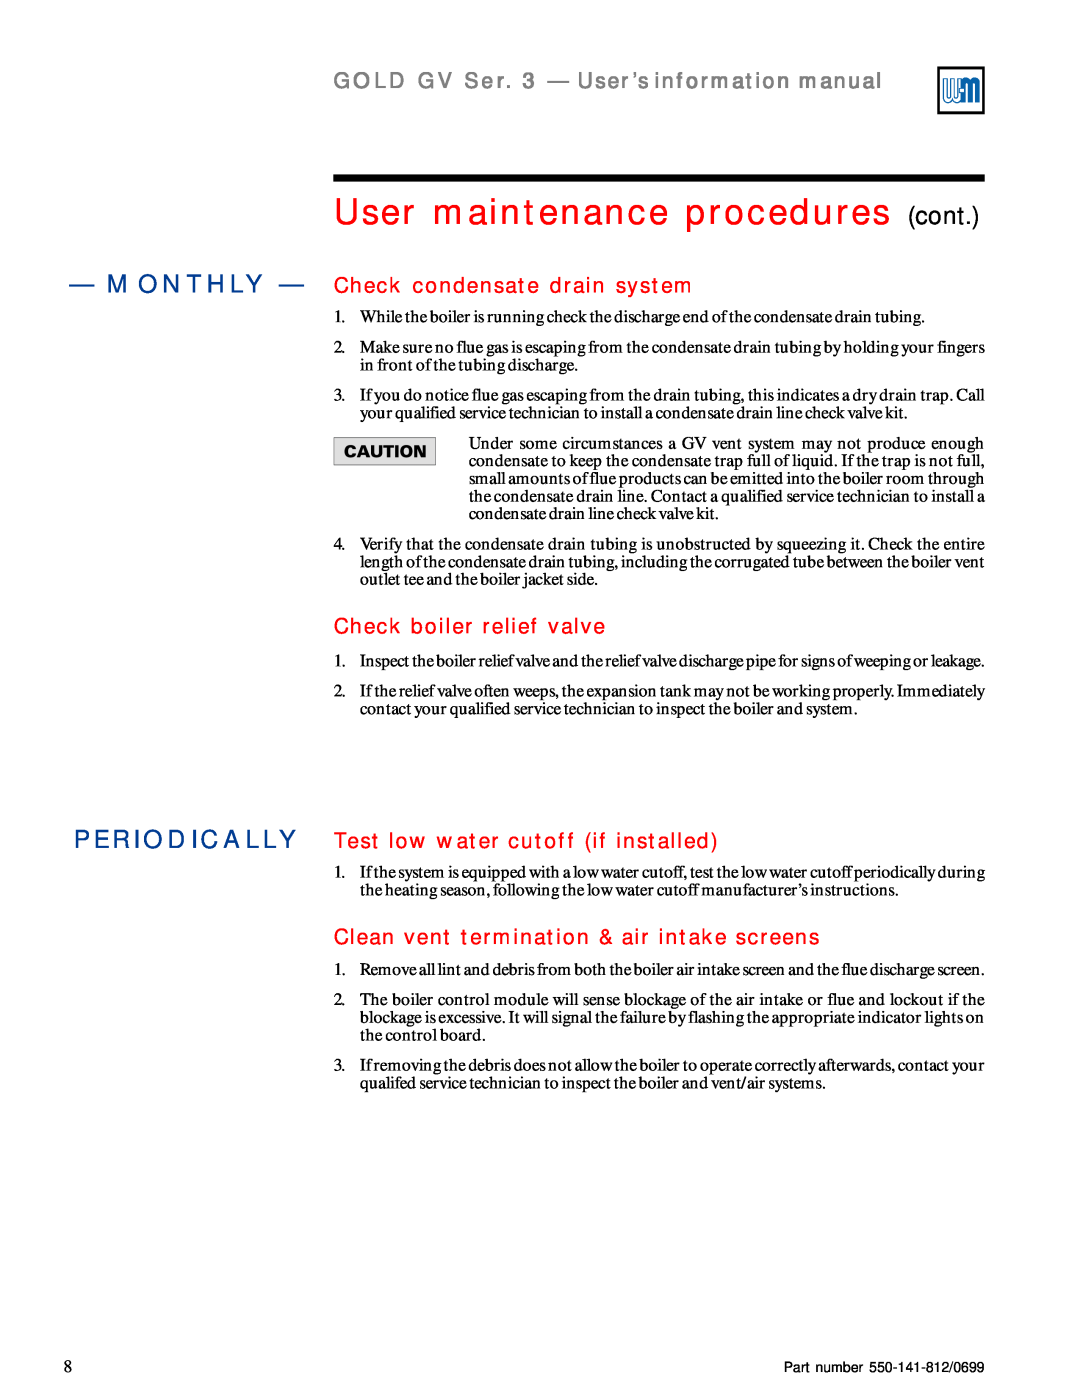 Weil-McLain 3 Series User maintenance procedures cont, GOLD GV Ser. 3 — User’s information manual 